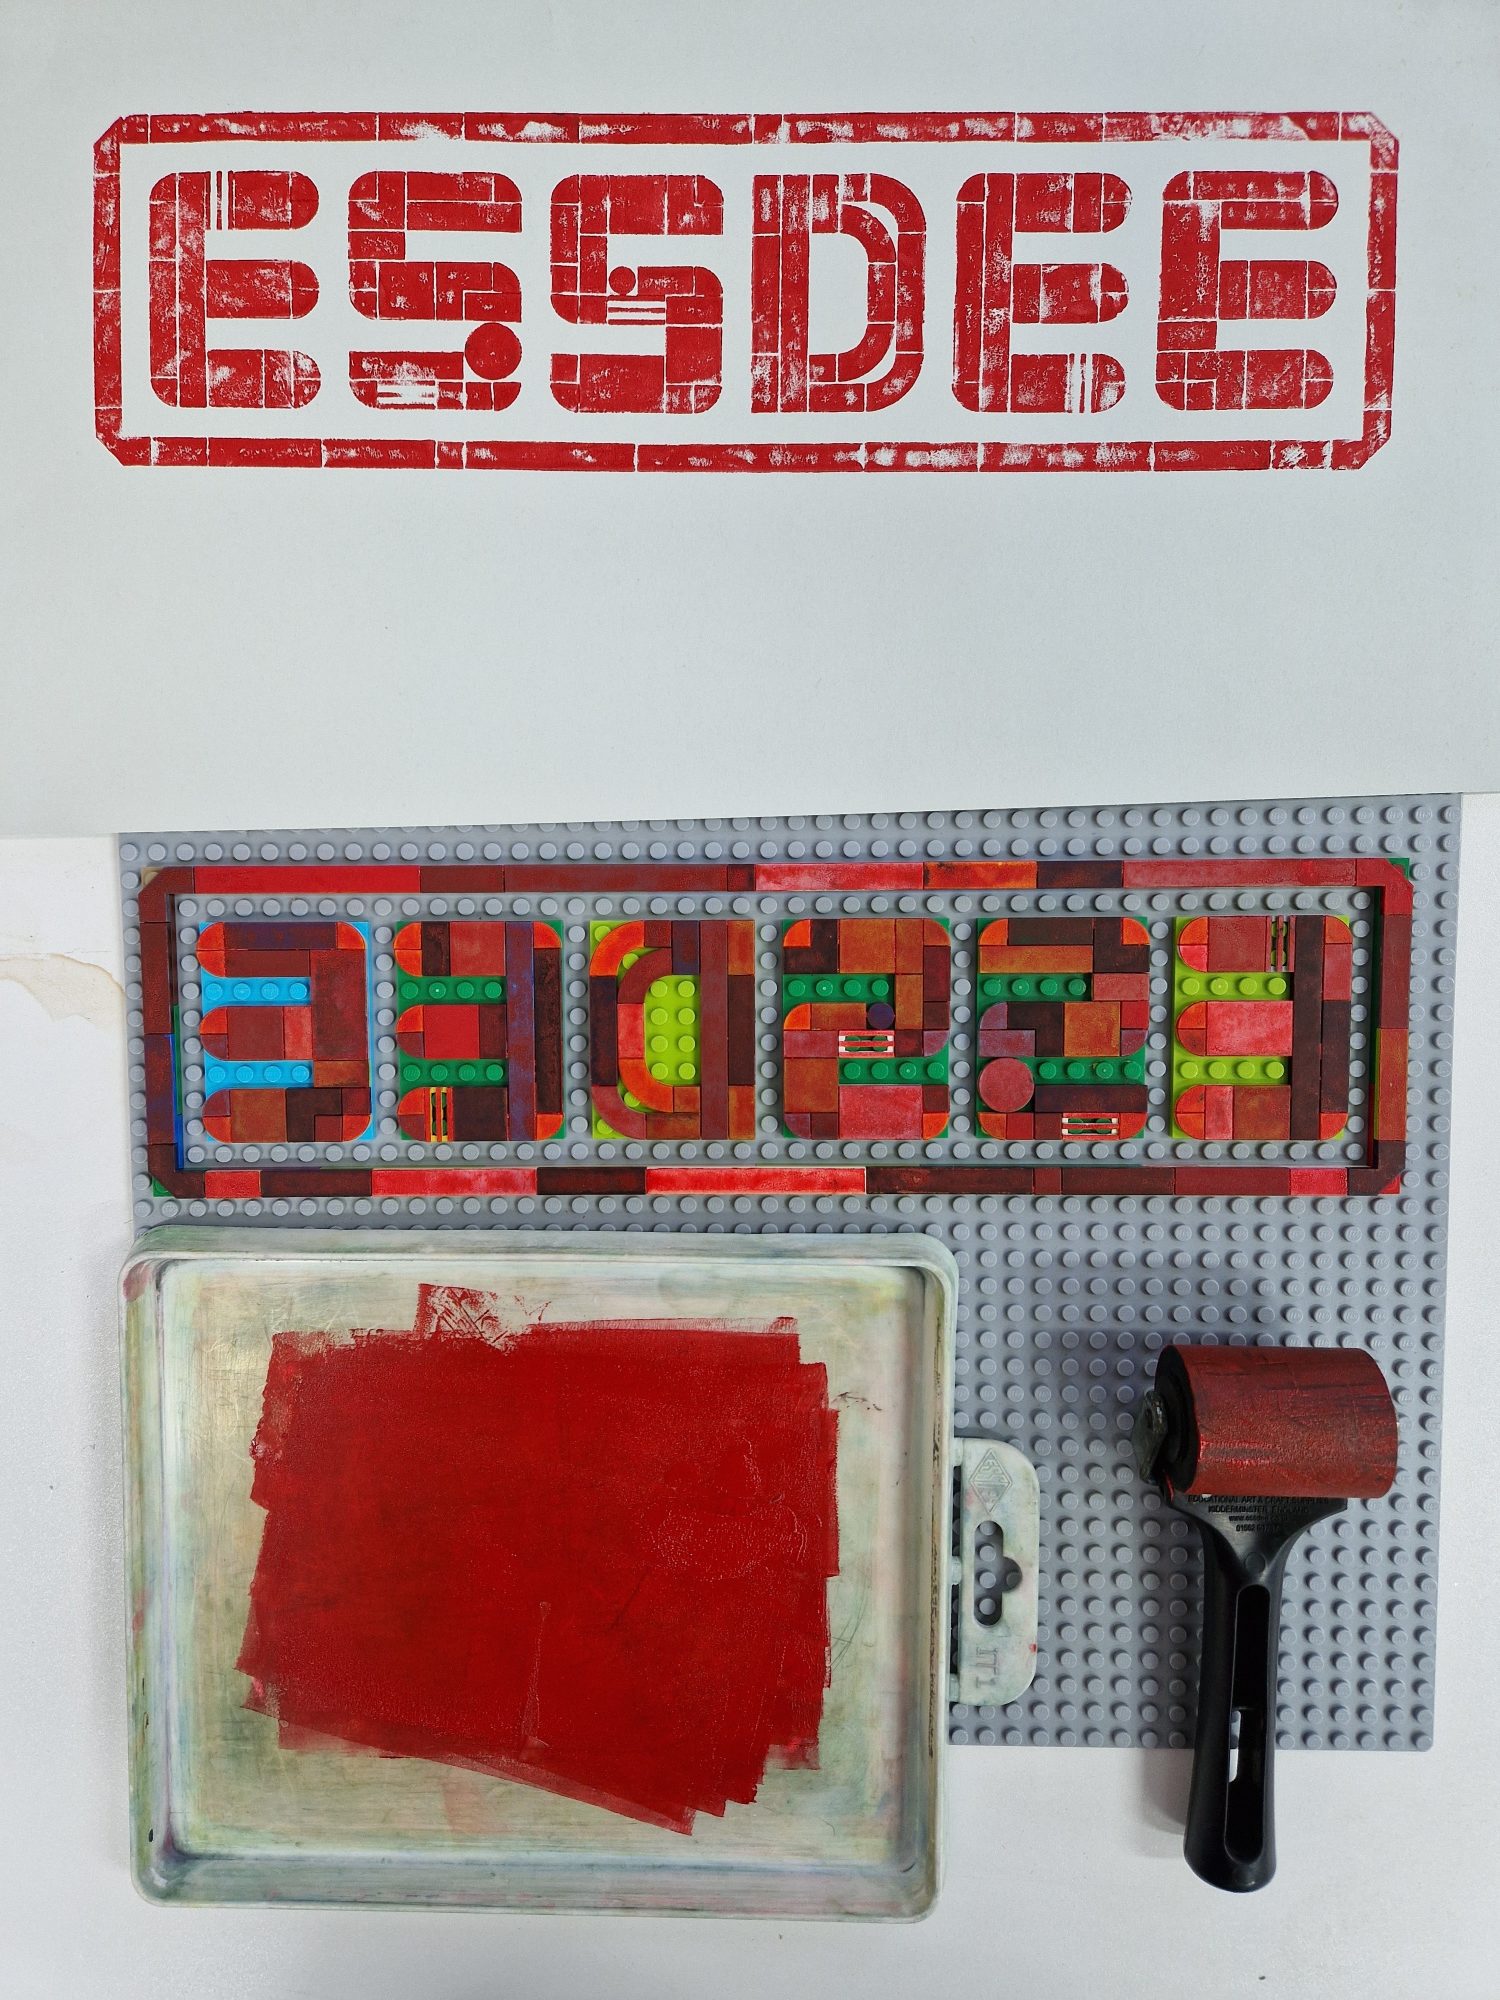 work in progress lego print of essdee logo by Sombrero printing